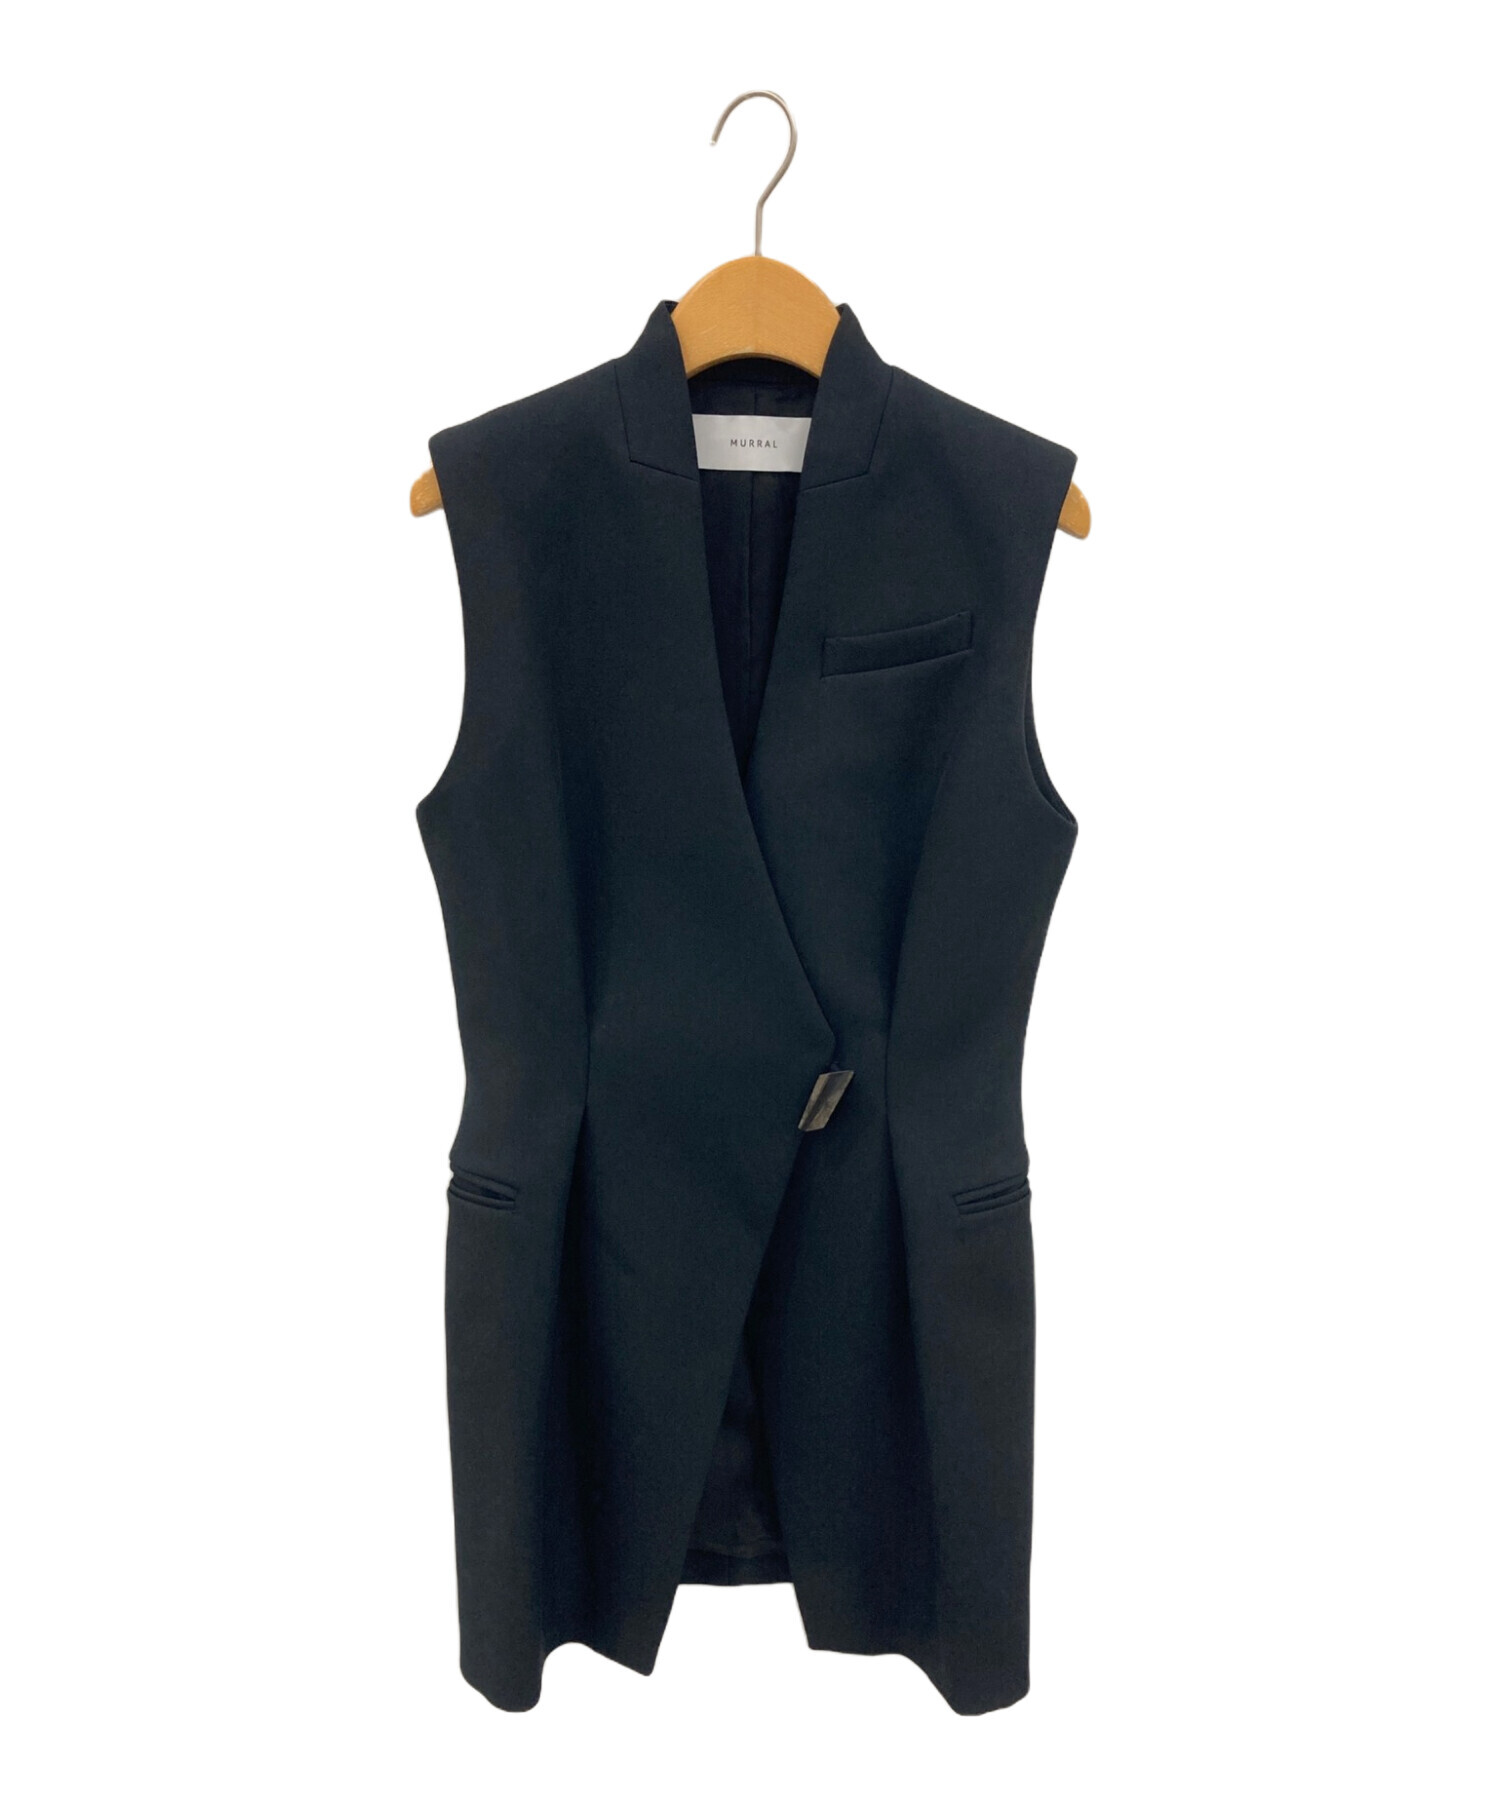 MURRAL (ミューラル) Umbrella vest ブラック サイズ:Fタグ表記フリーサイズ